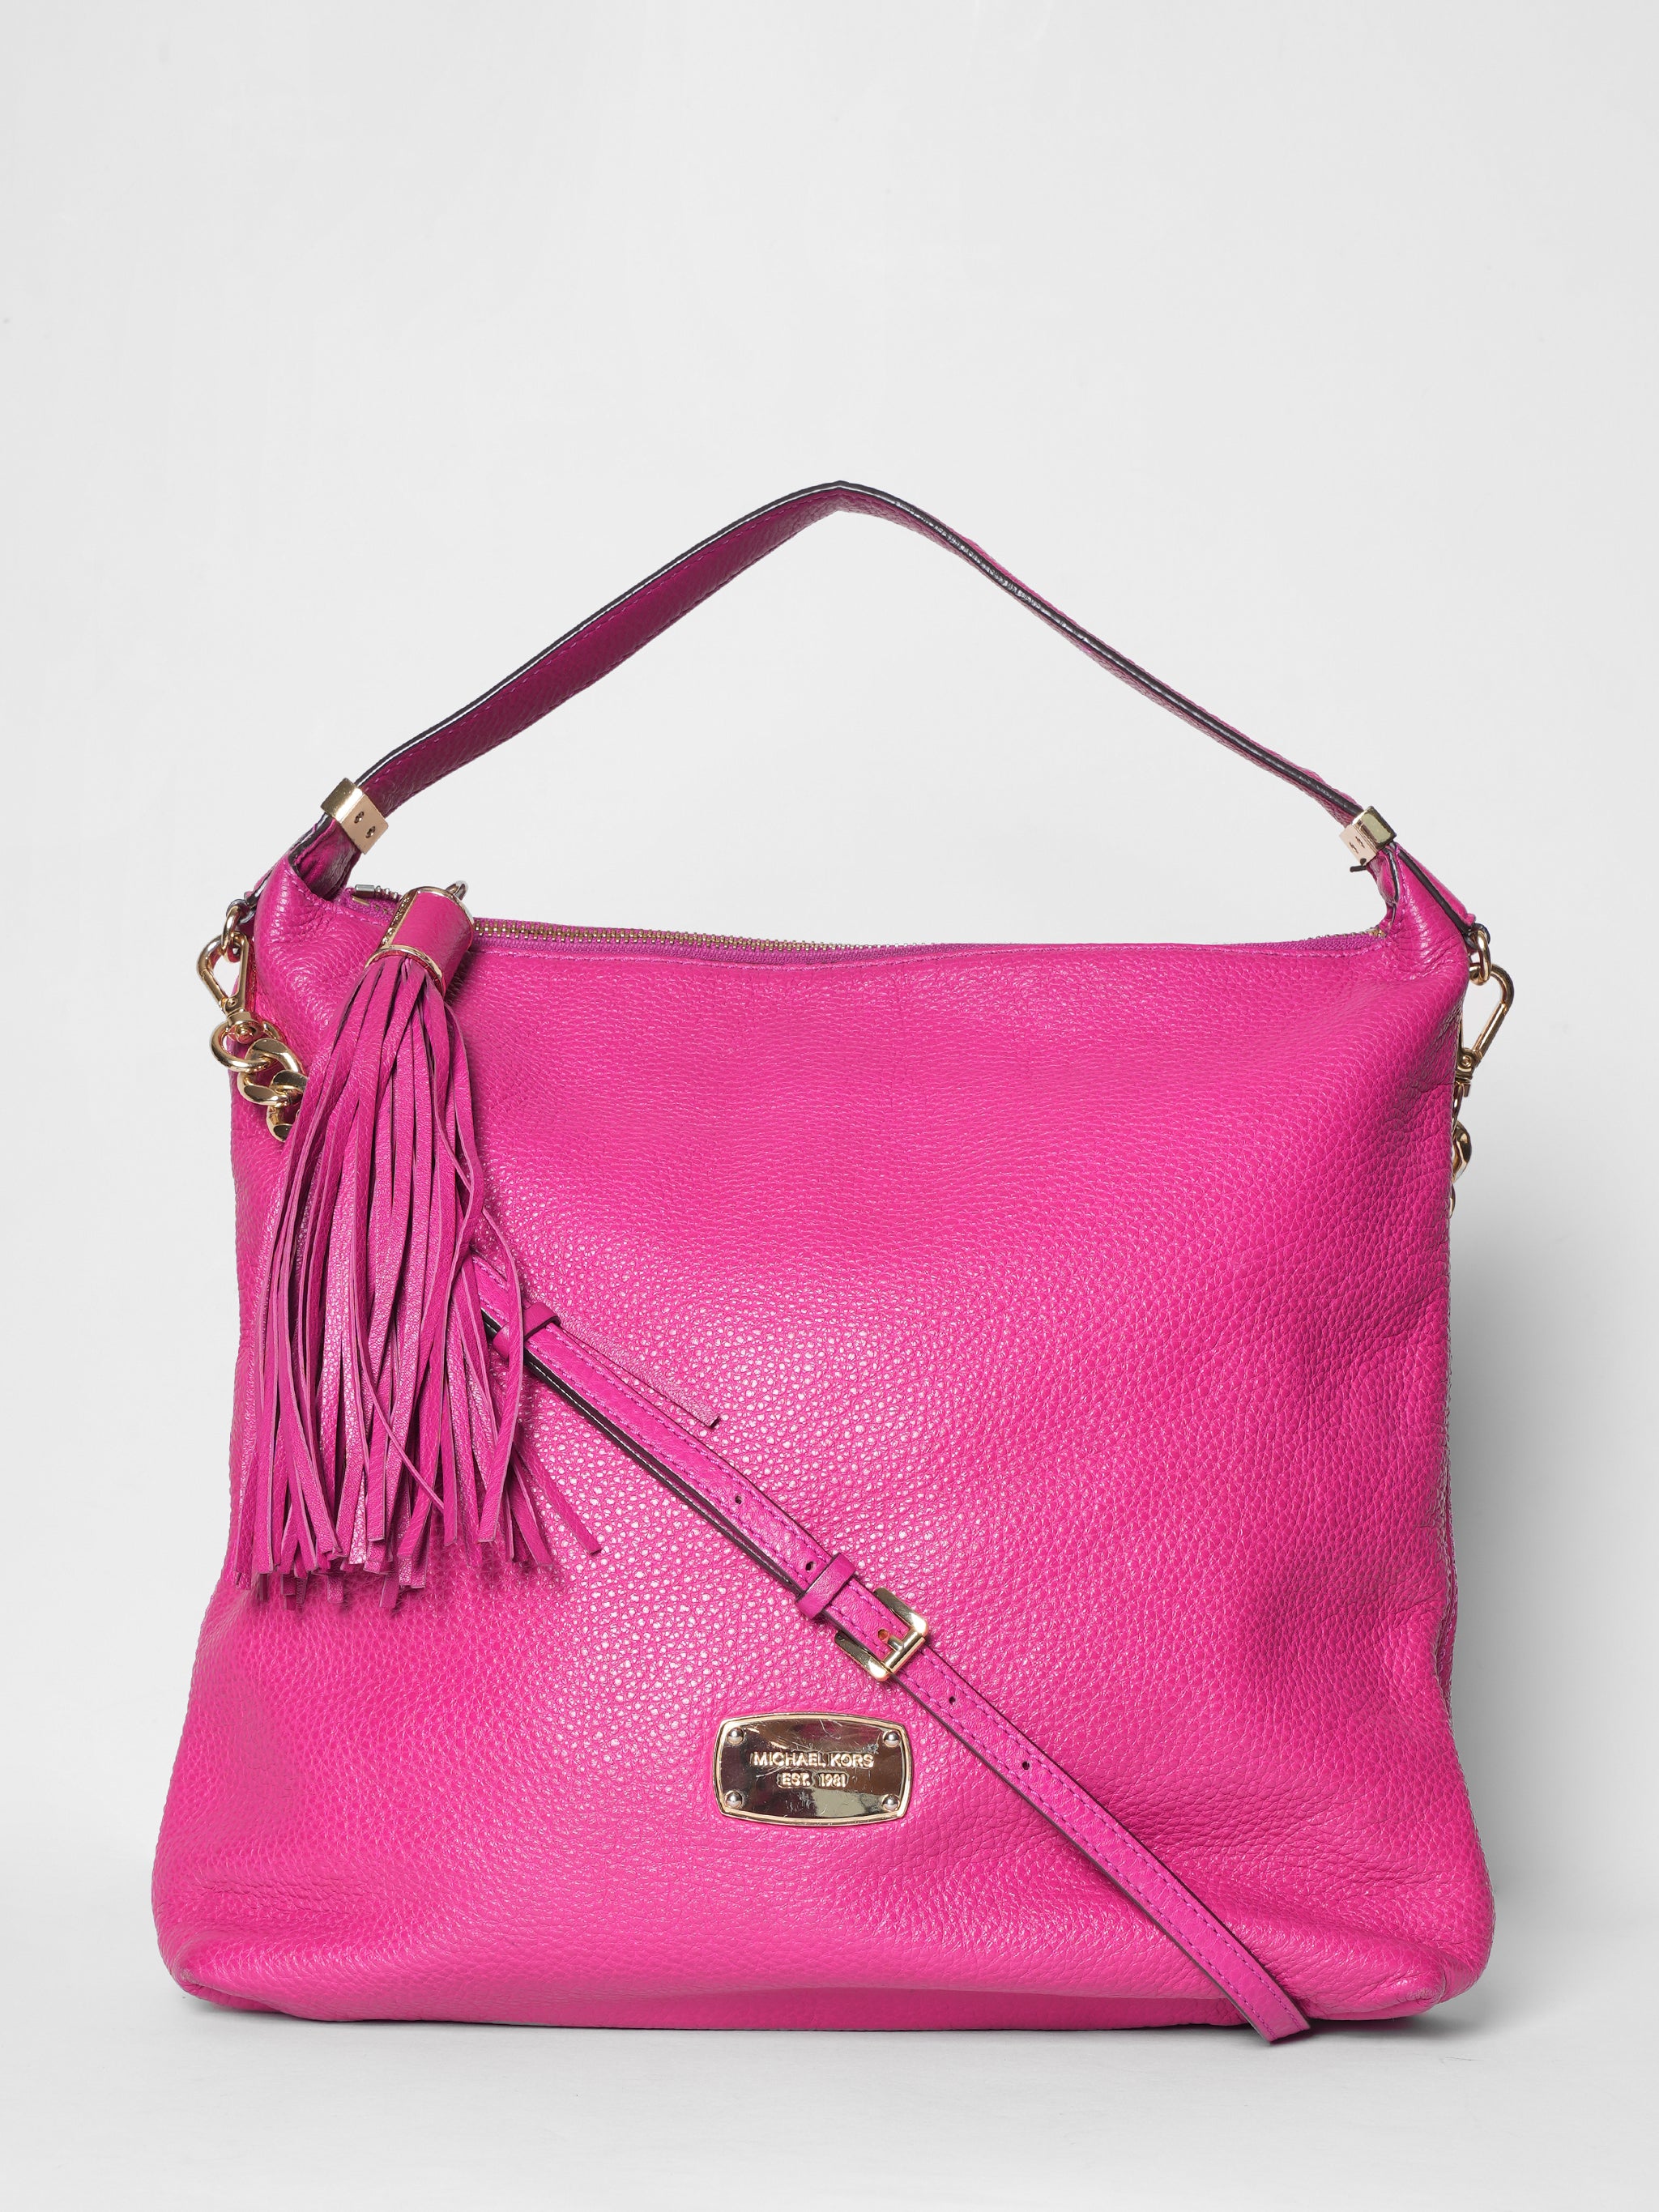 Michael Kors Fuchsia Pink Handbag